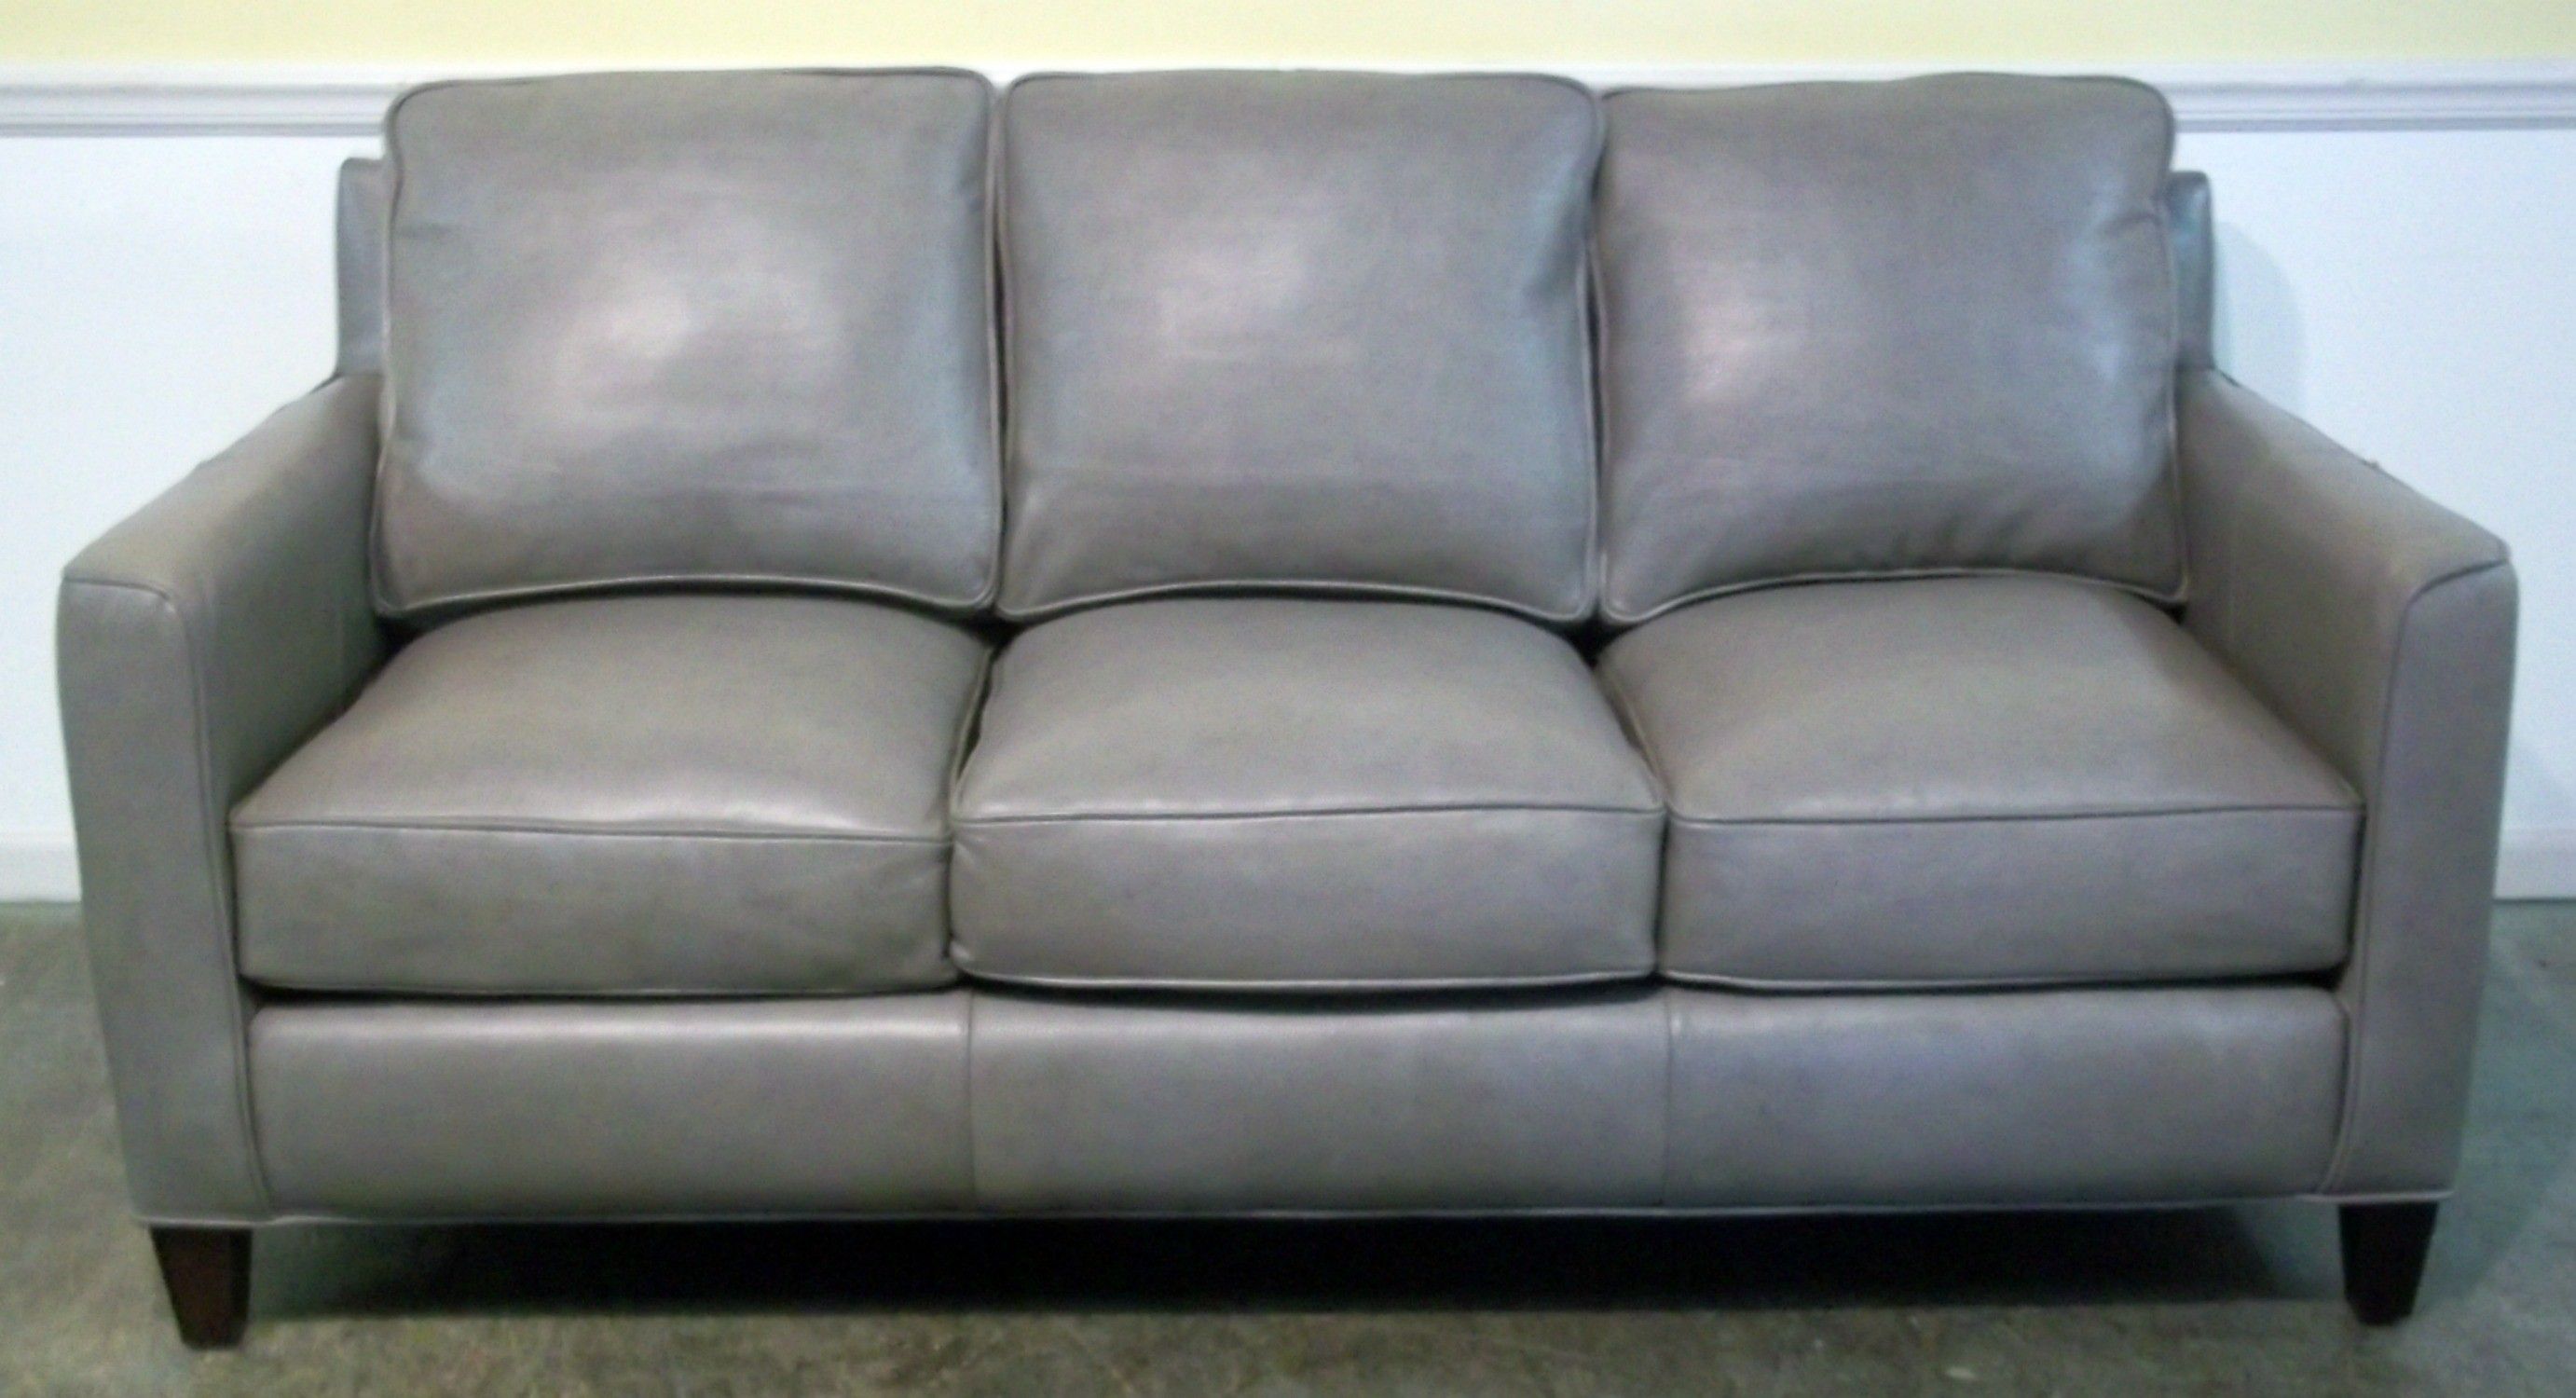 Sofas Center Light Grey Aspen Leather Sofa Sofas For Sale Dark Intended For Aspen Leather Sofas (View 11 of 15)